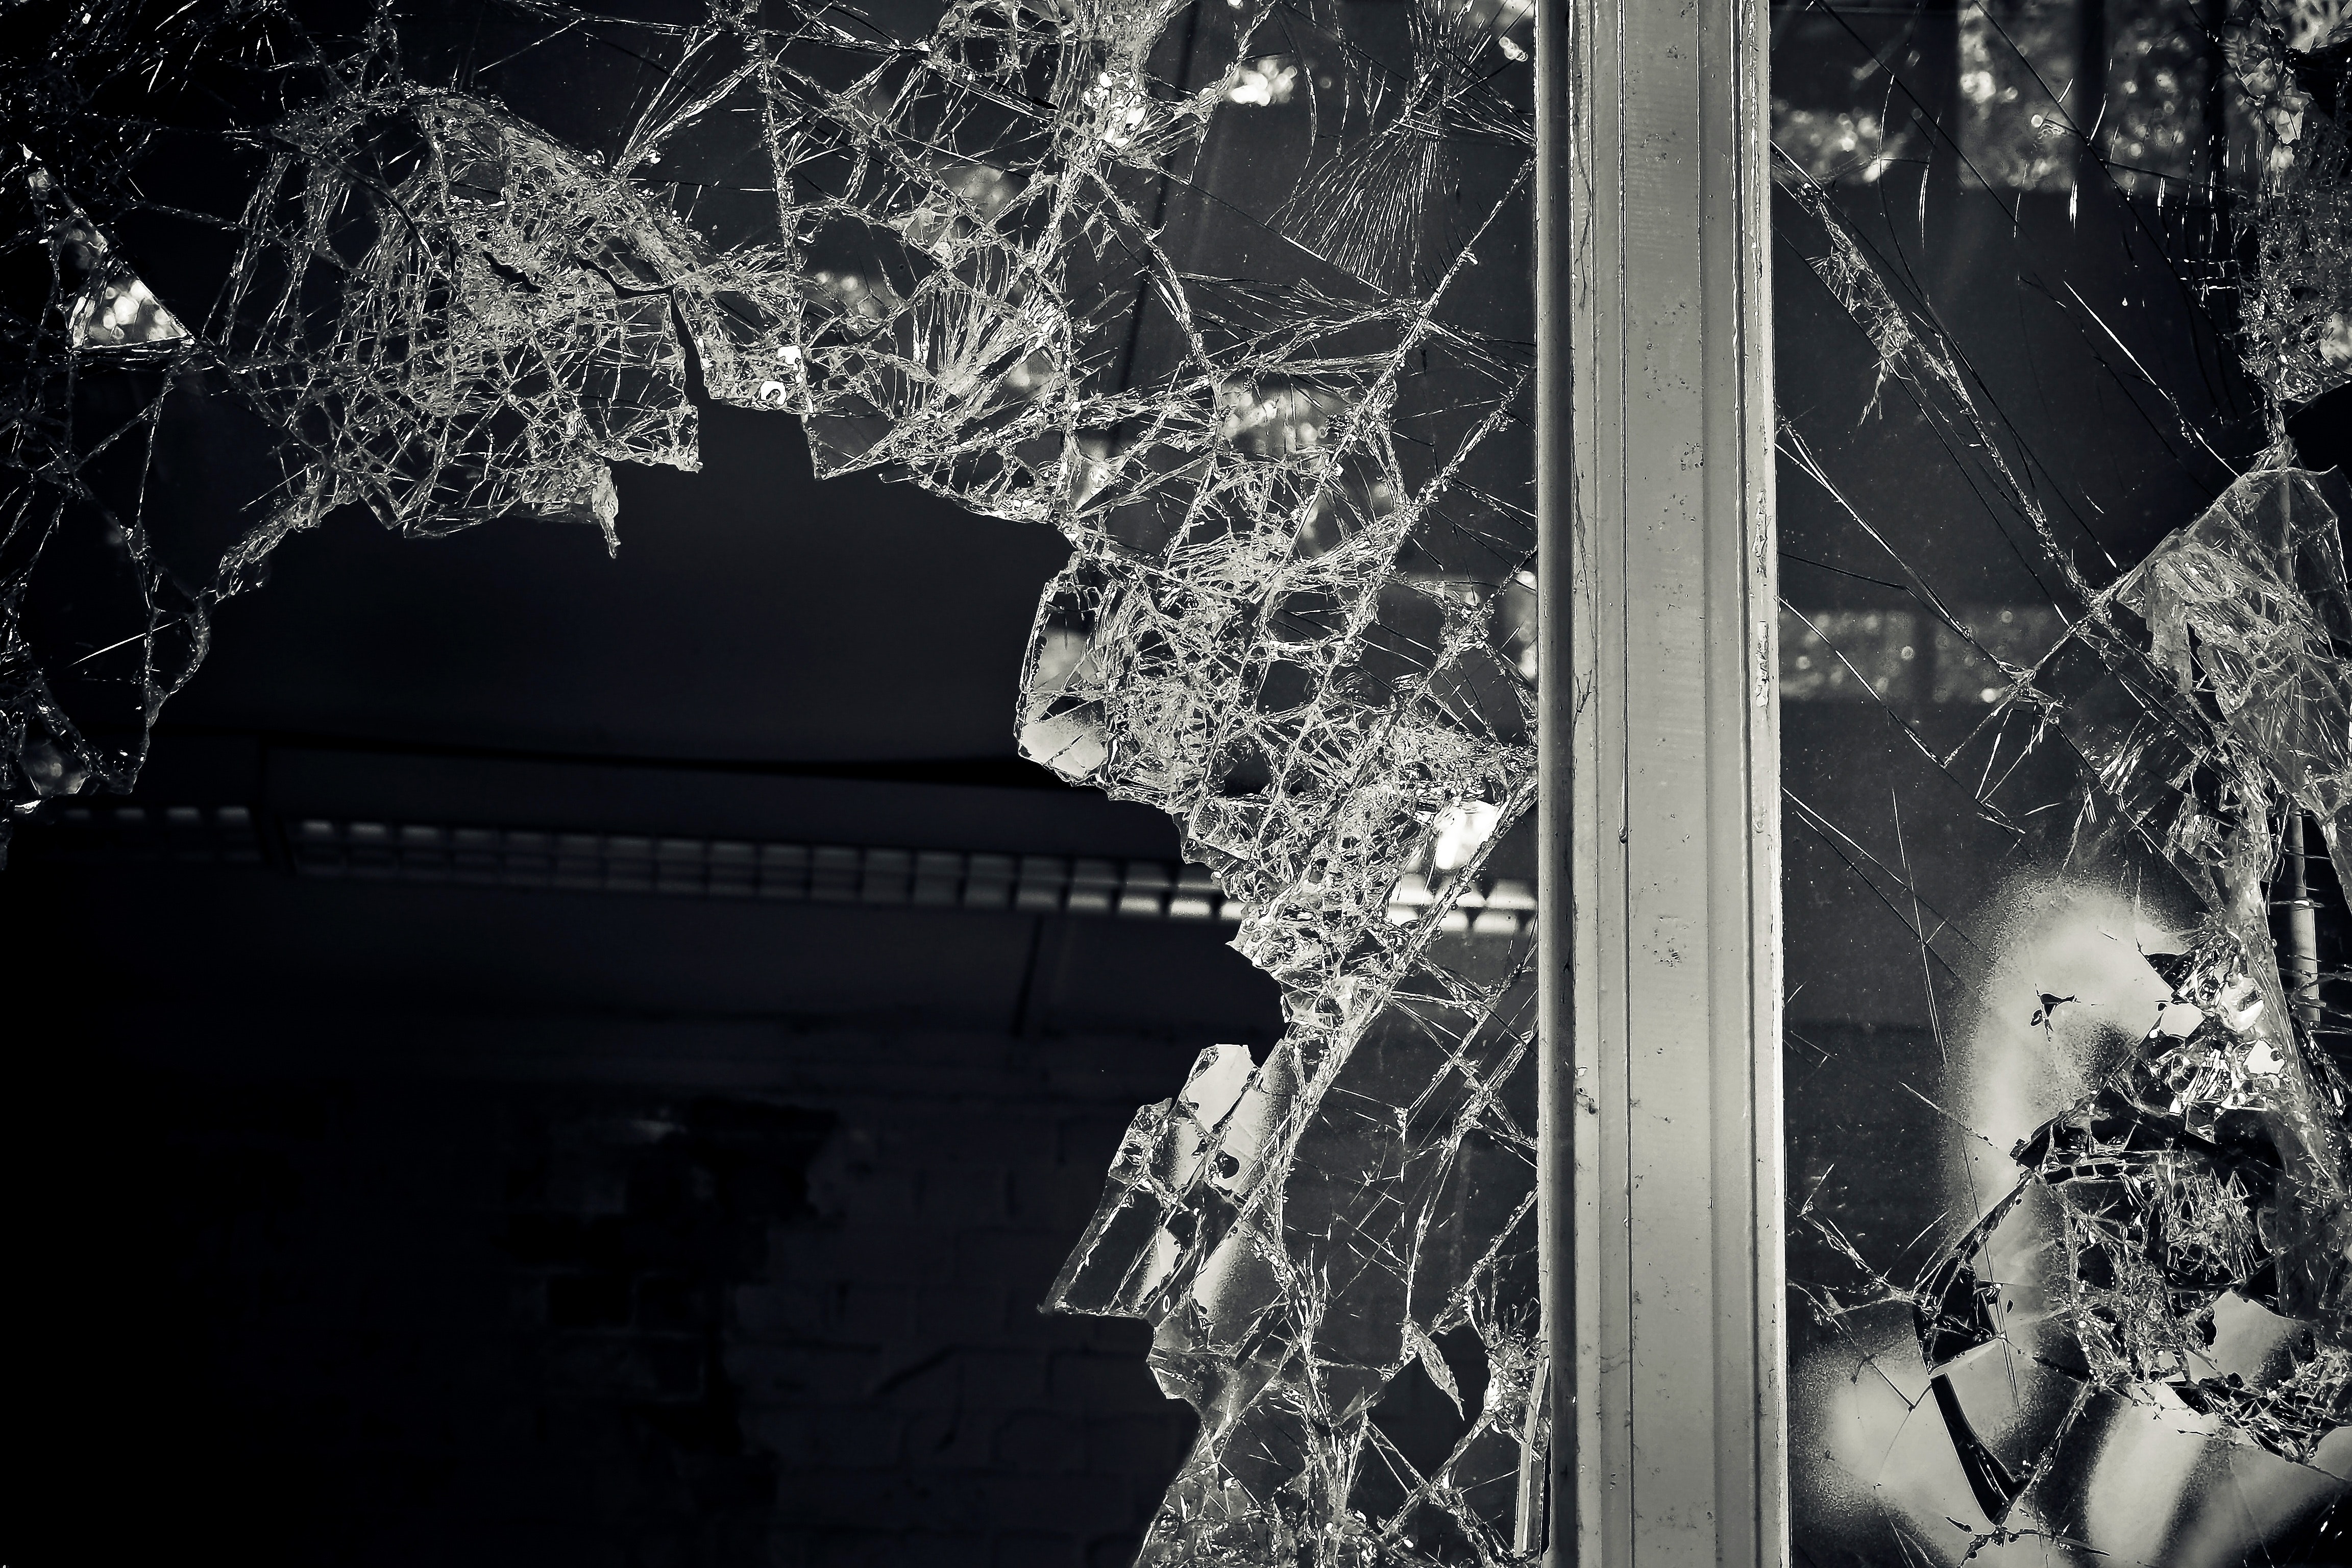 Трещина на окне. Разбитое окно. Разбитые окна. Разбитое стекло в окне. Разбитый стеклопакет.